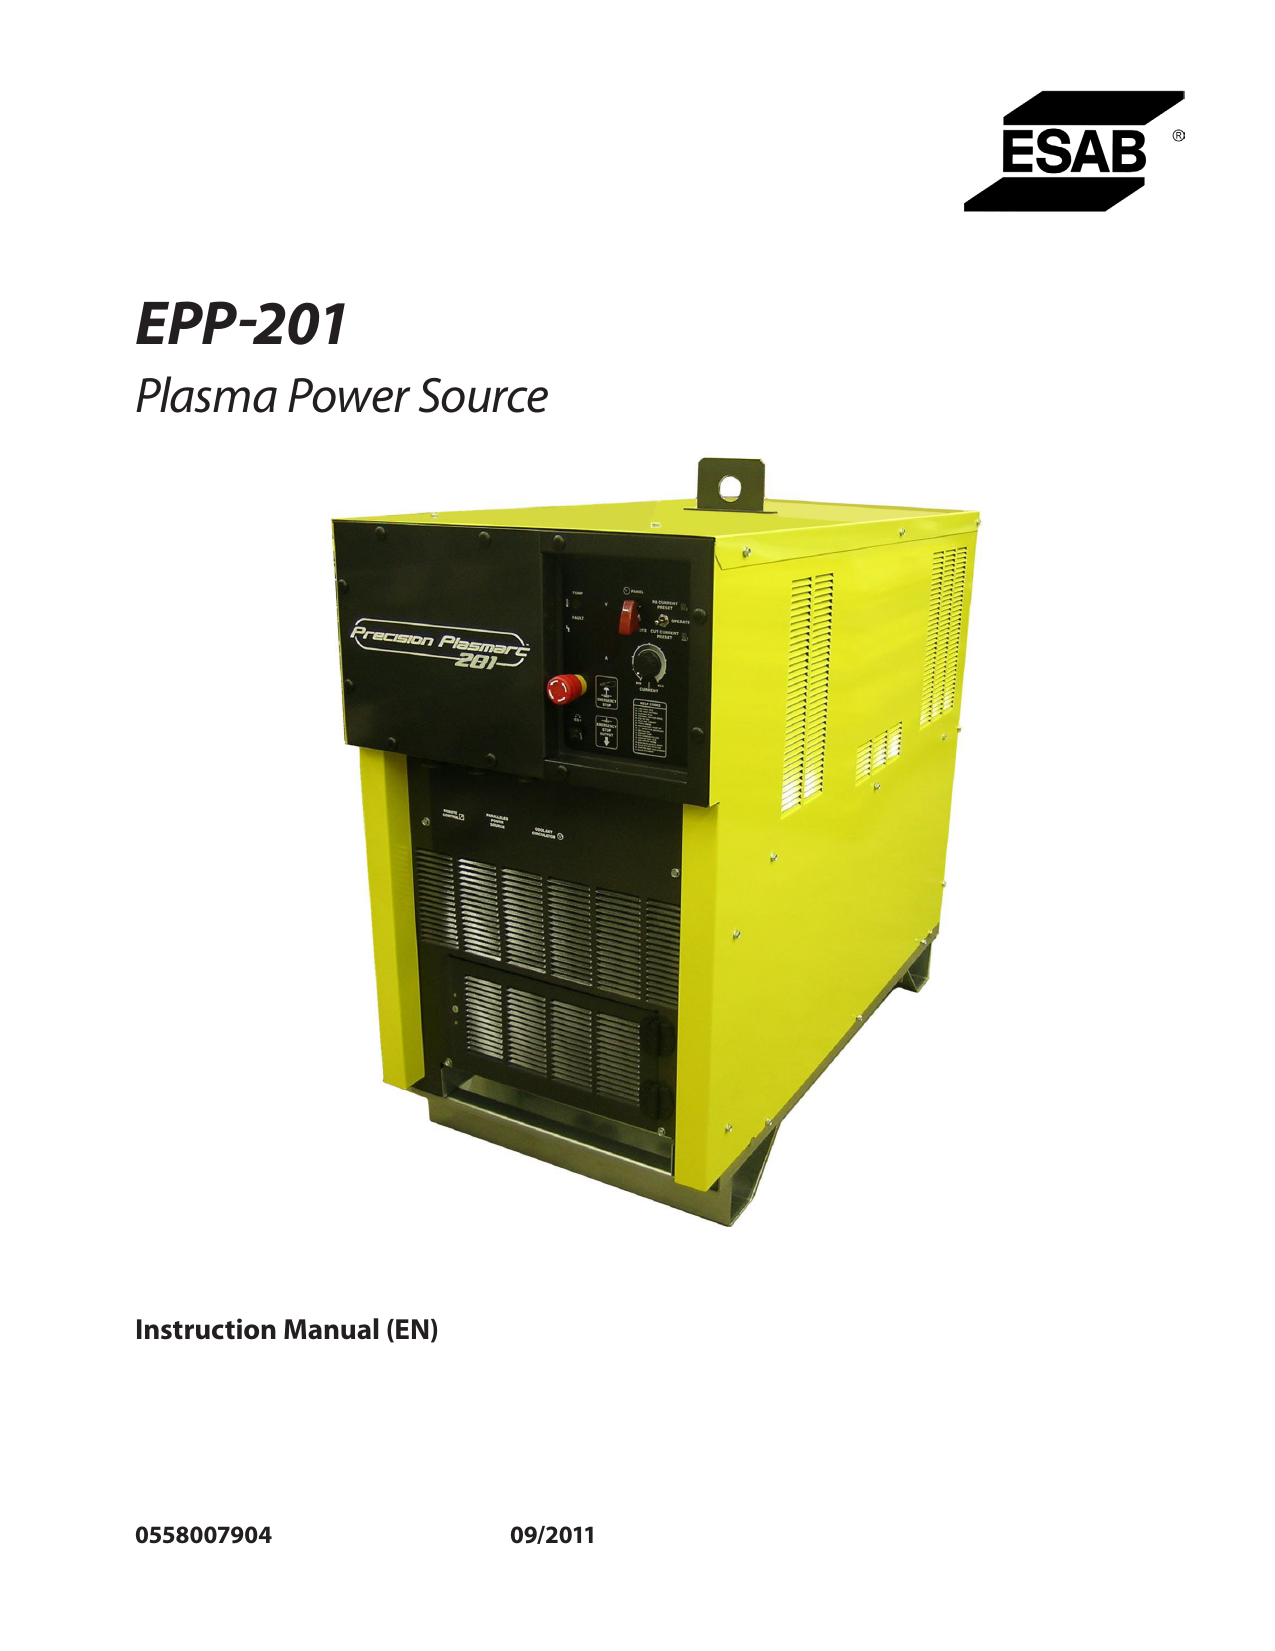 EPP-201 Plasma Power Source